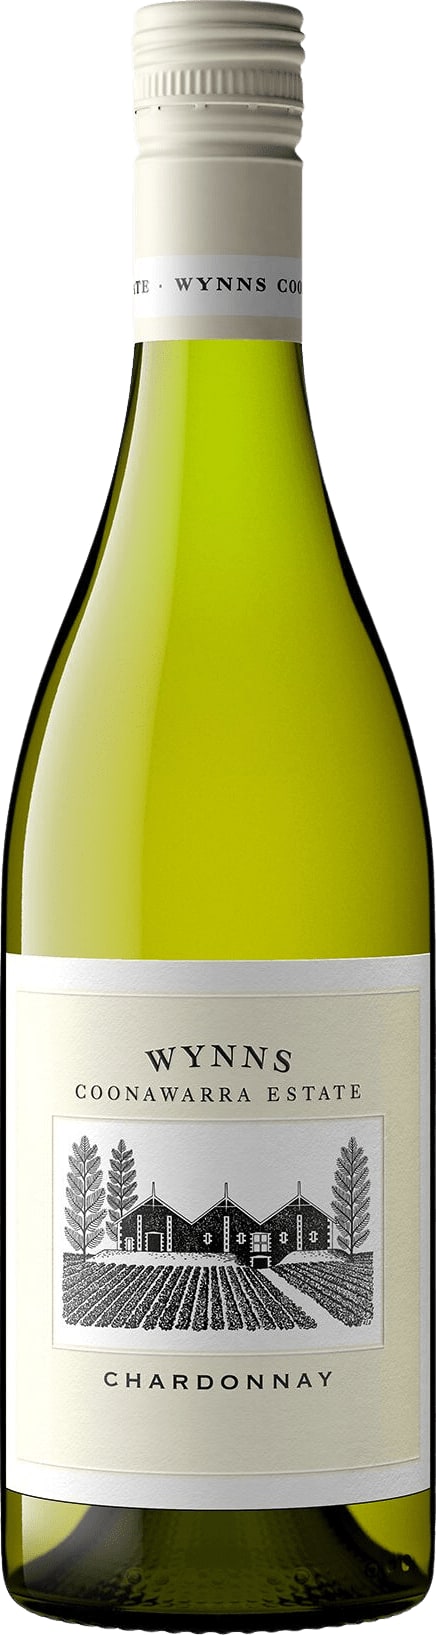 Wynns Coonawarra Estate Chardonnay 2021 75cl - Buy Wynns Wines from GREAT WINES DIRECT wine shop